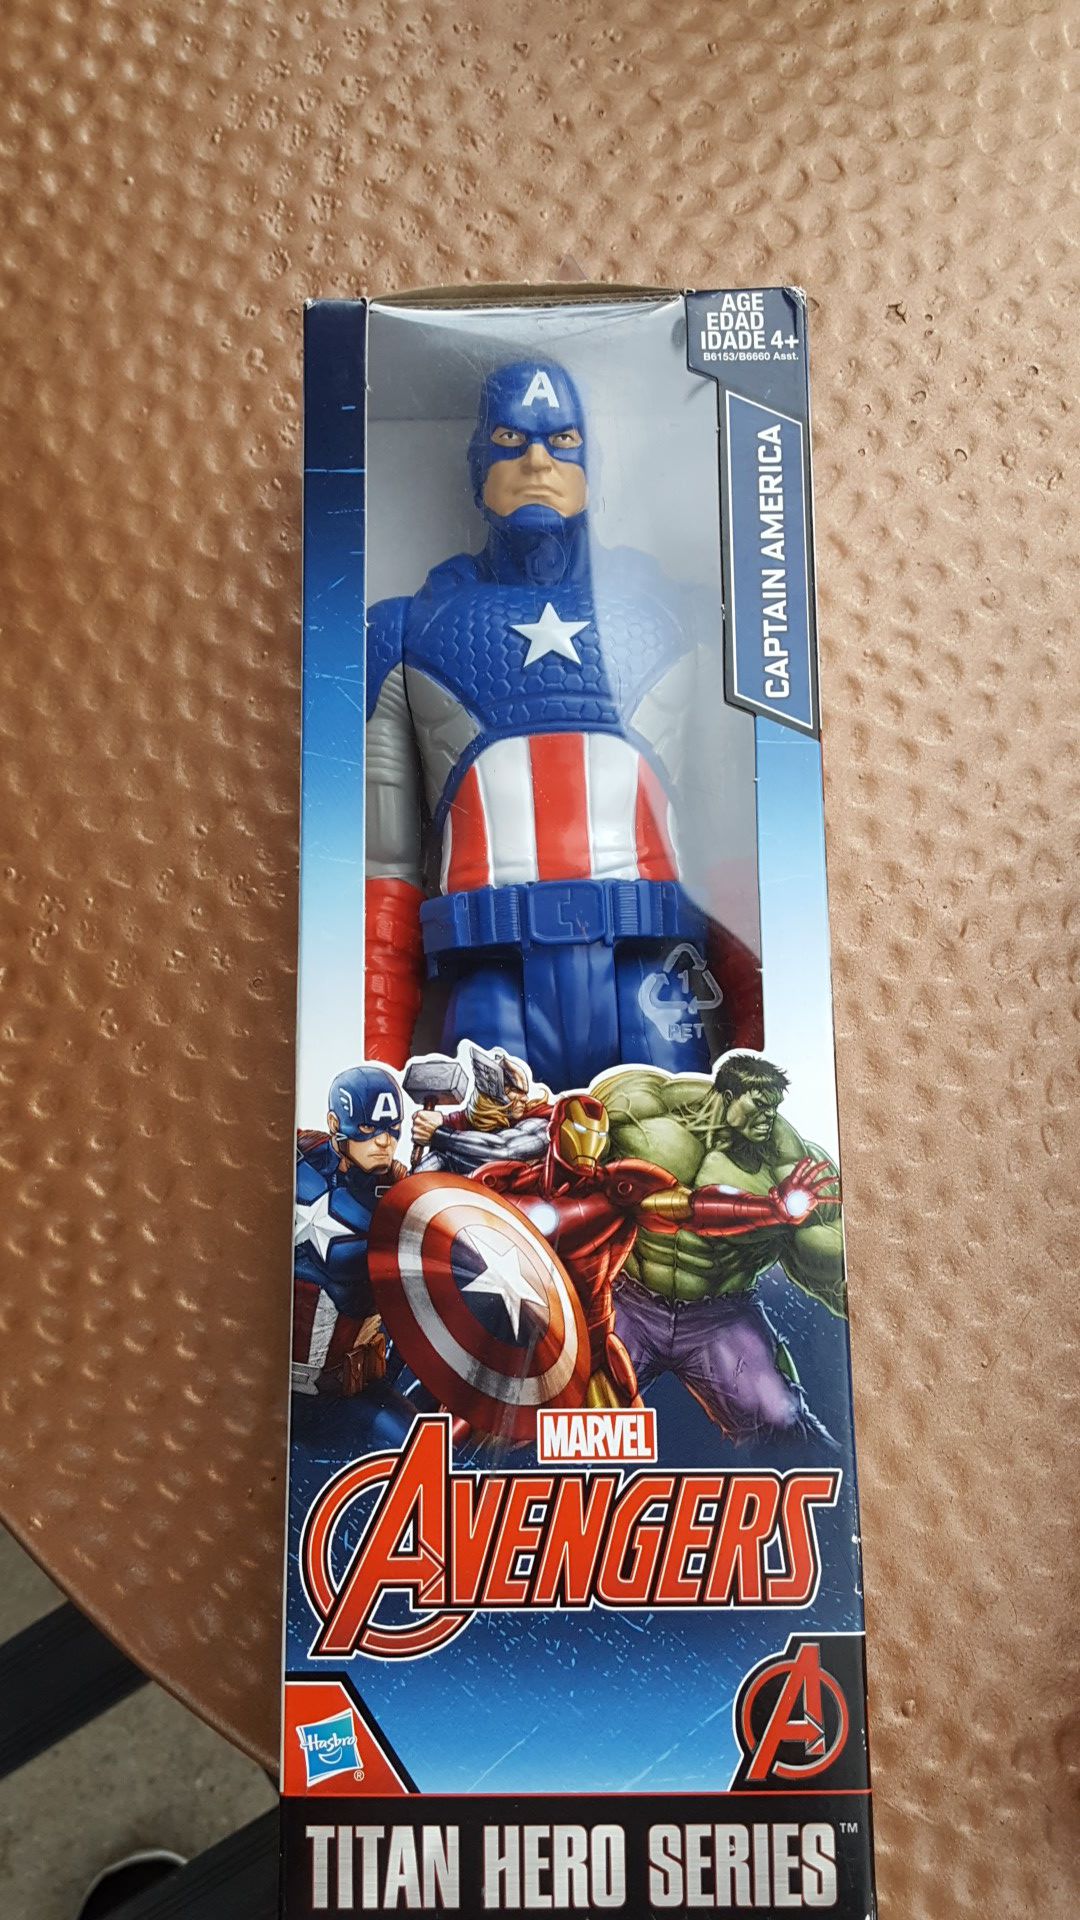 New Captain America action figure